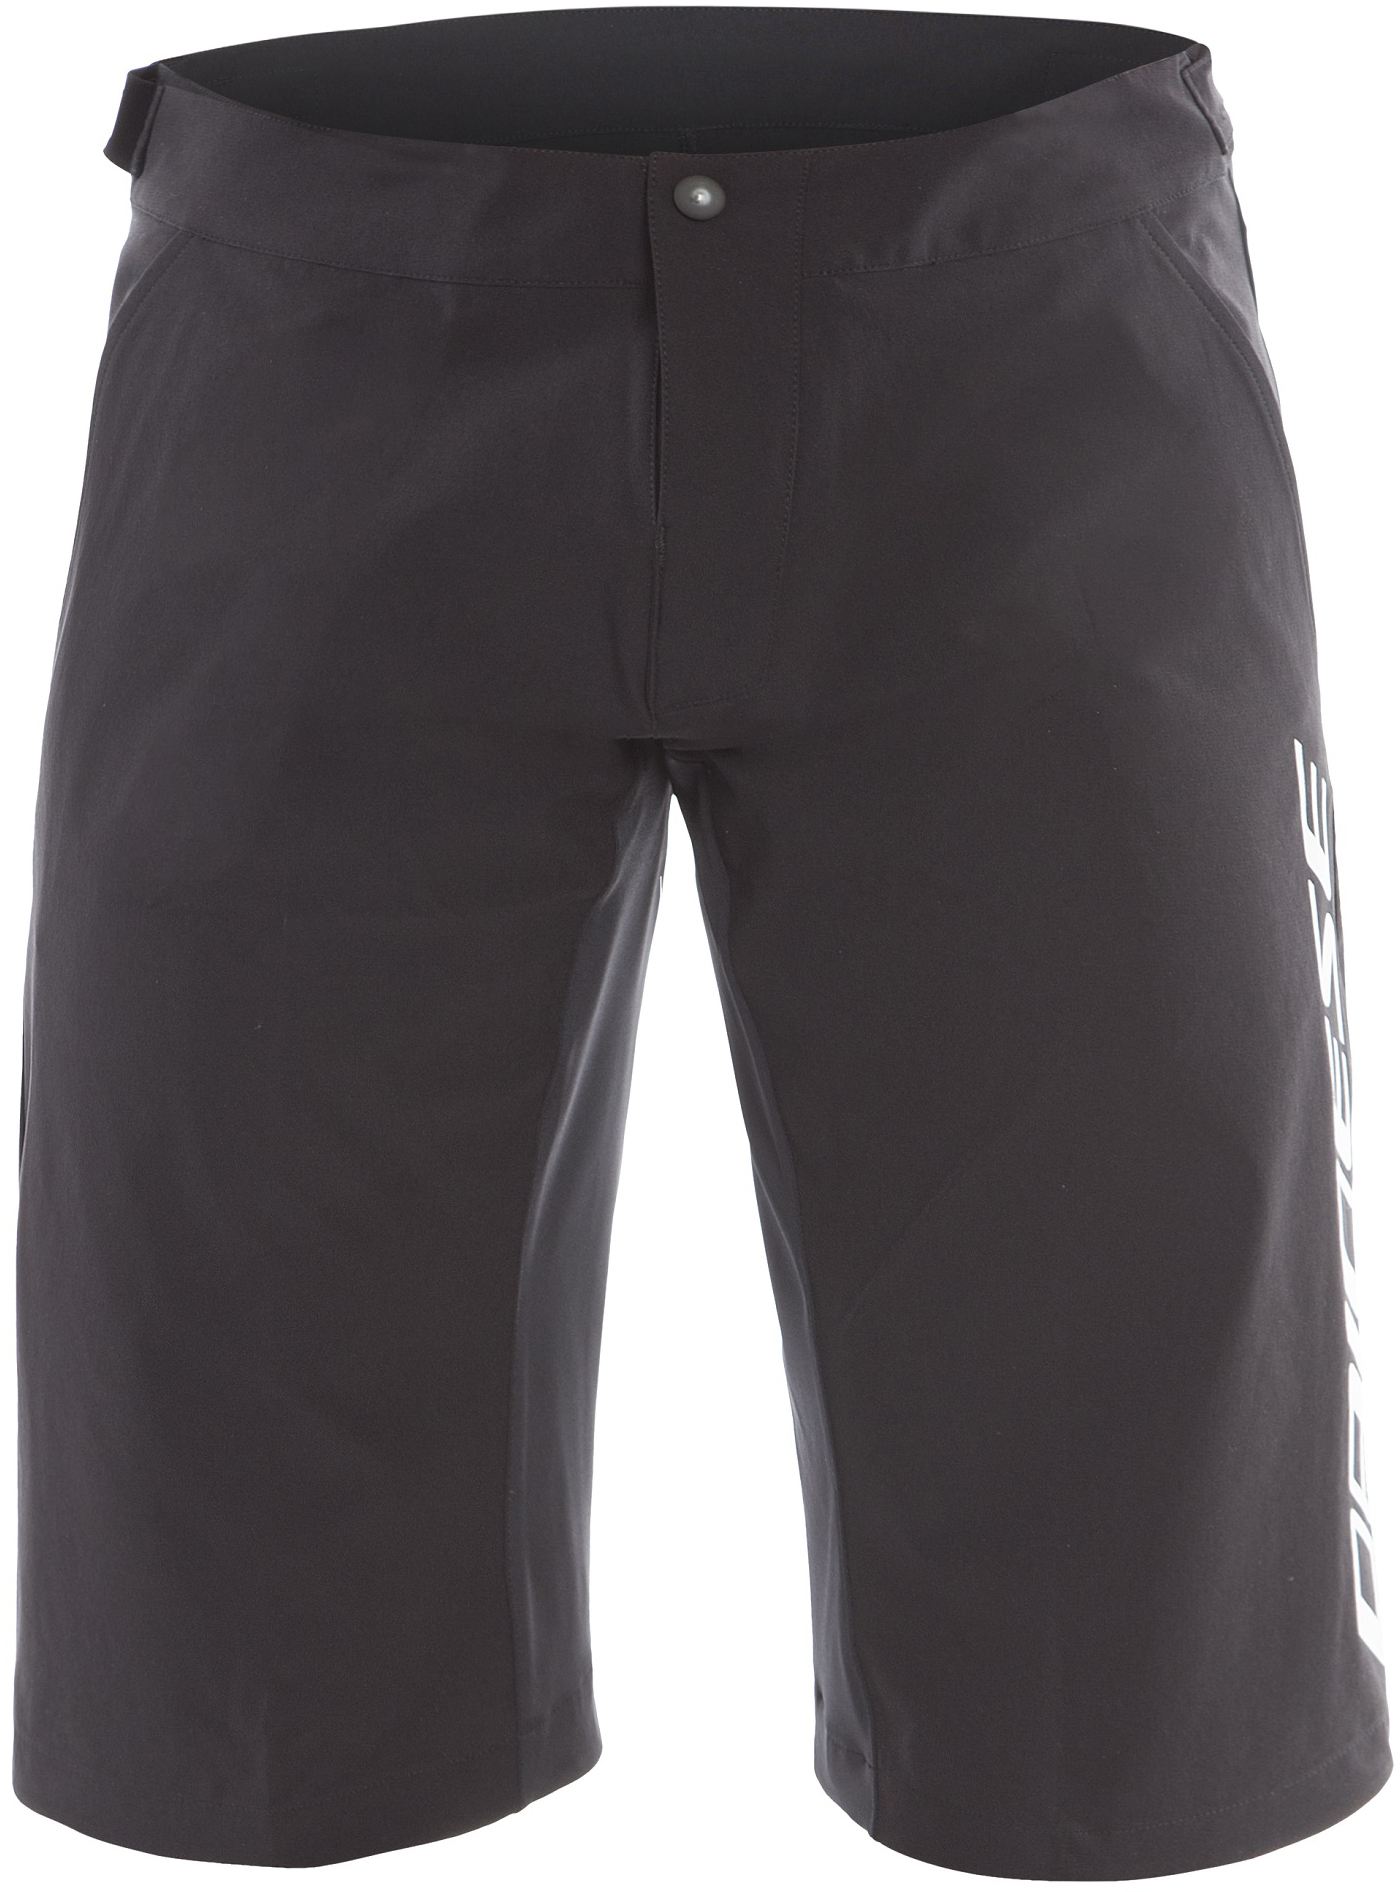 Шорты мужские Dainese Hg Shorts 3 черные XL